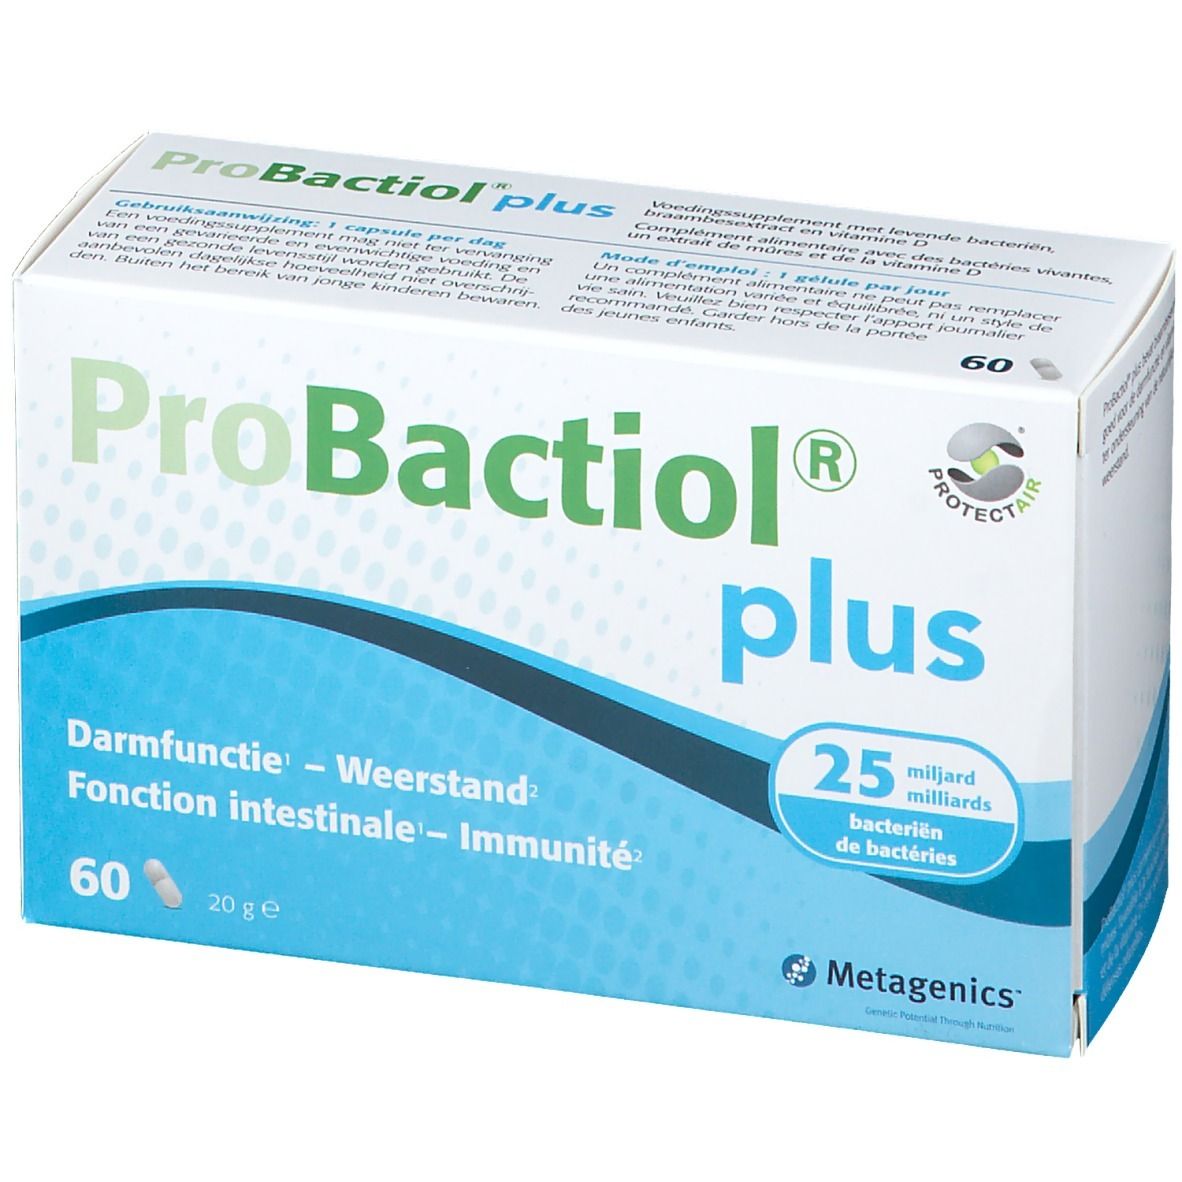 Metagenics™ Probactiol® Plus